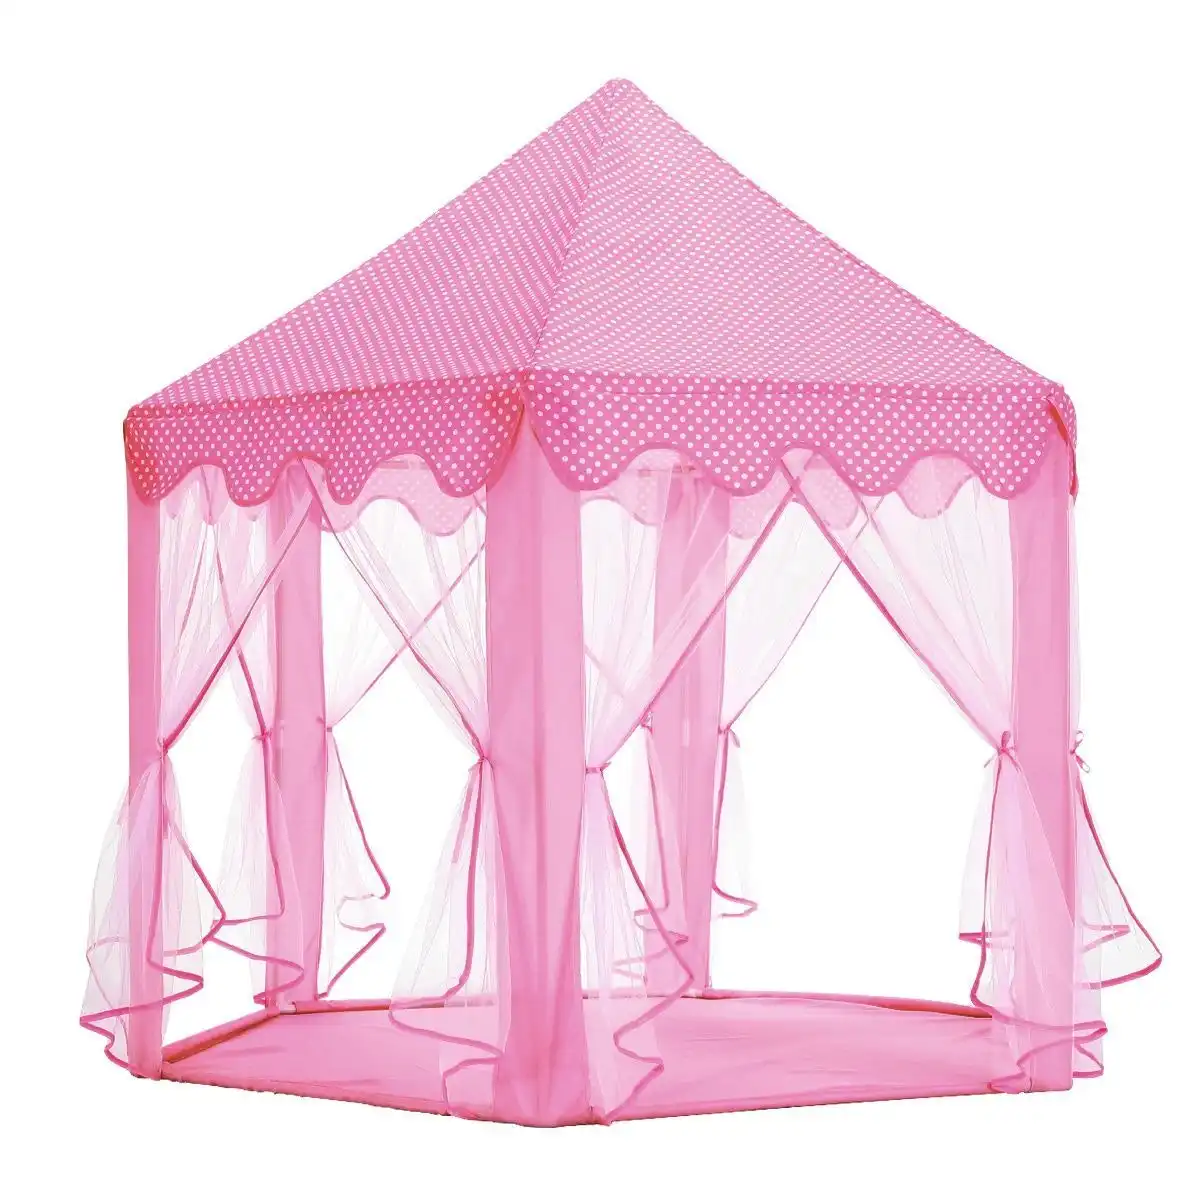 Ausway Kids Princess Castle Play Tent Hexagonal Play House Outdoor Indoor Playhouse Pink